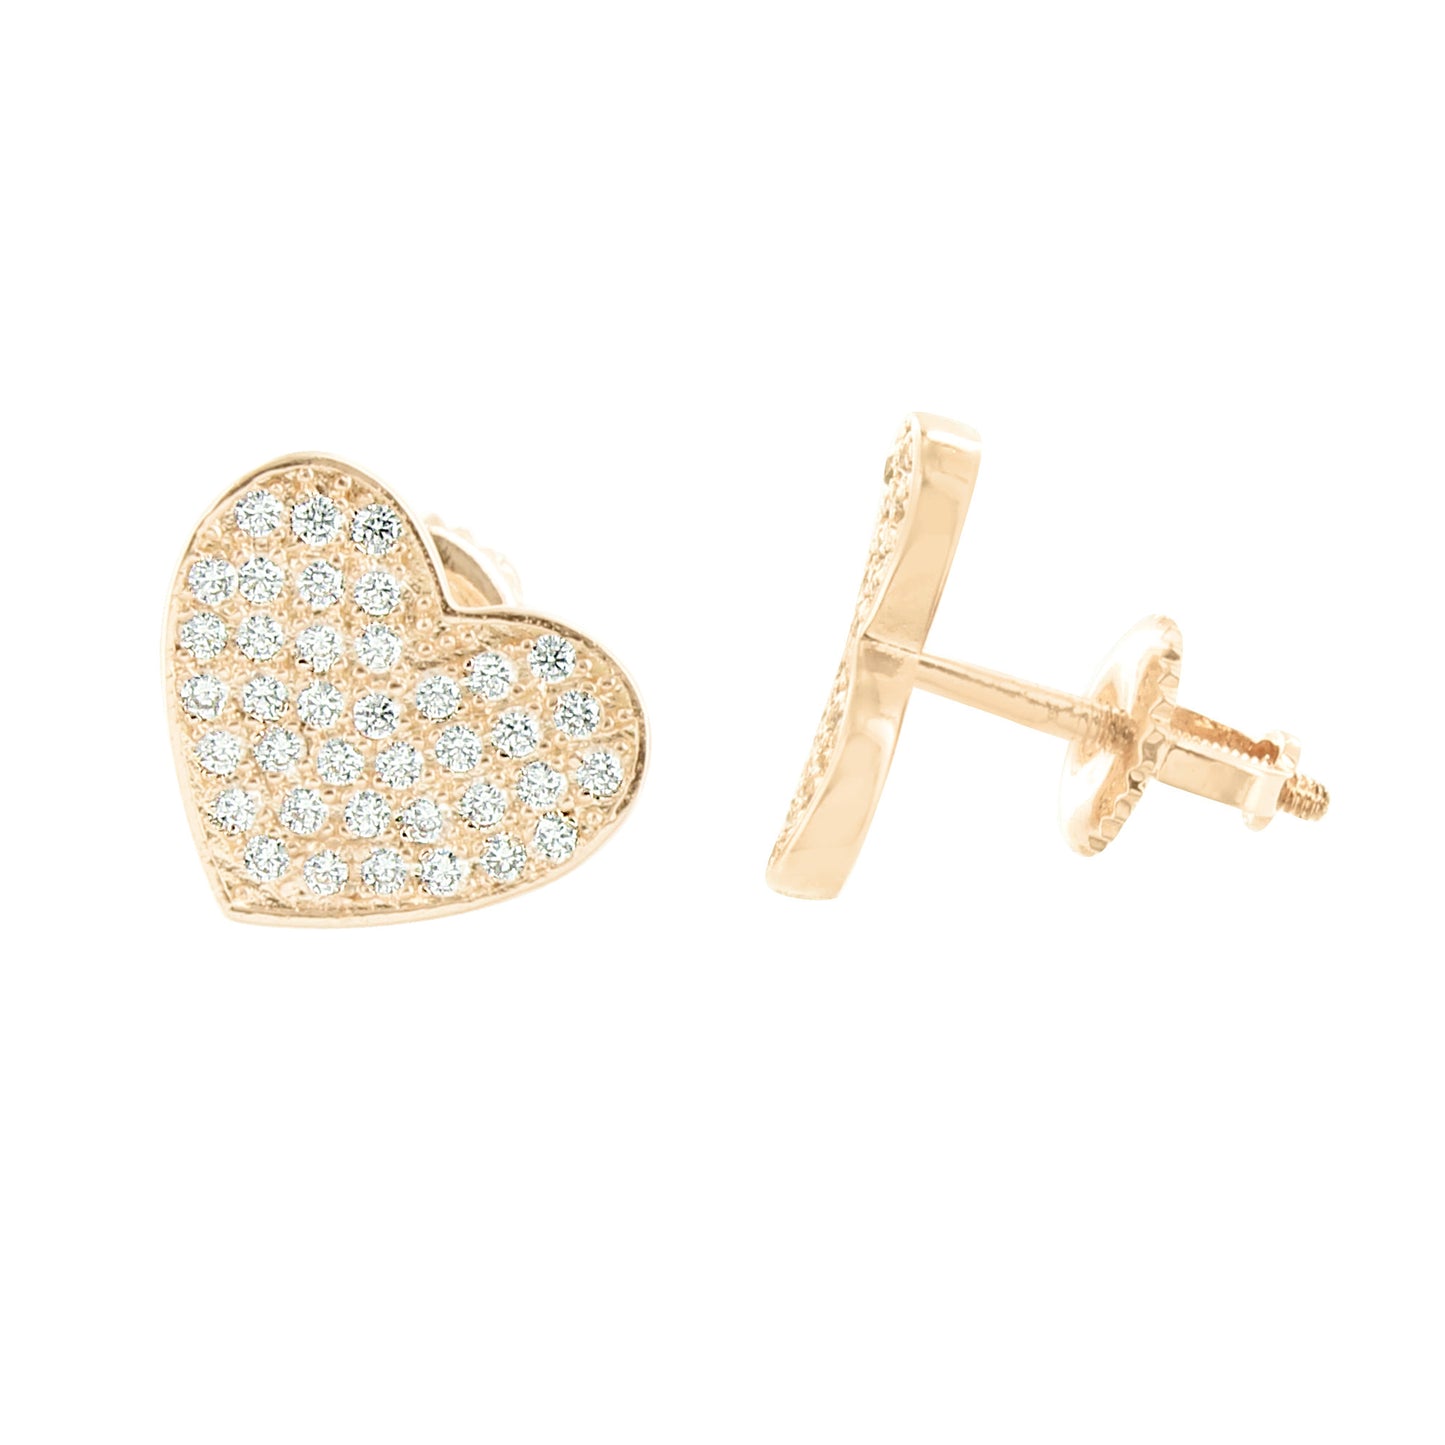 Womens Heart Shape Earrings 14K Rose Gold Finish Simulated Diamonds